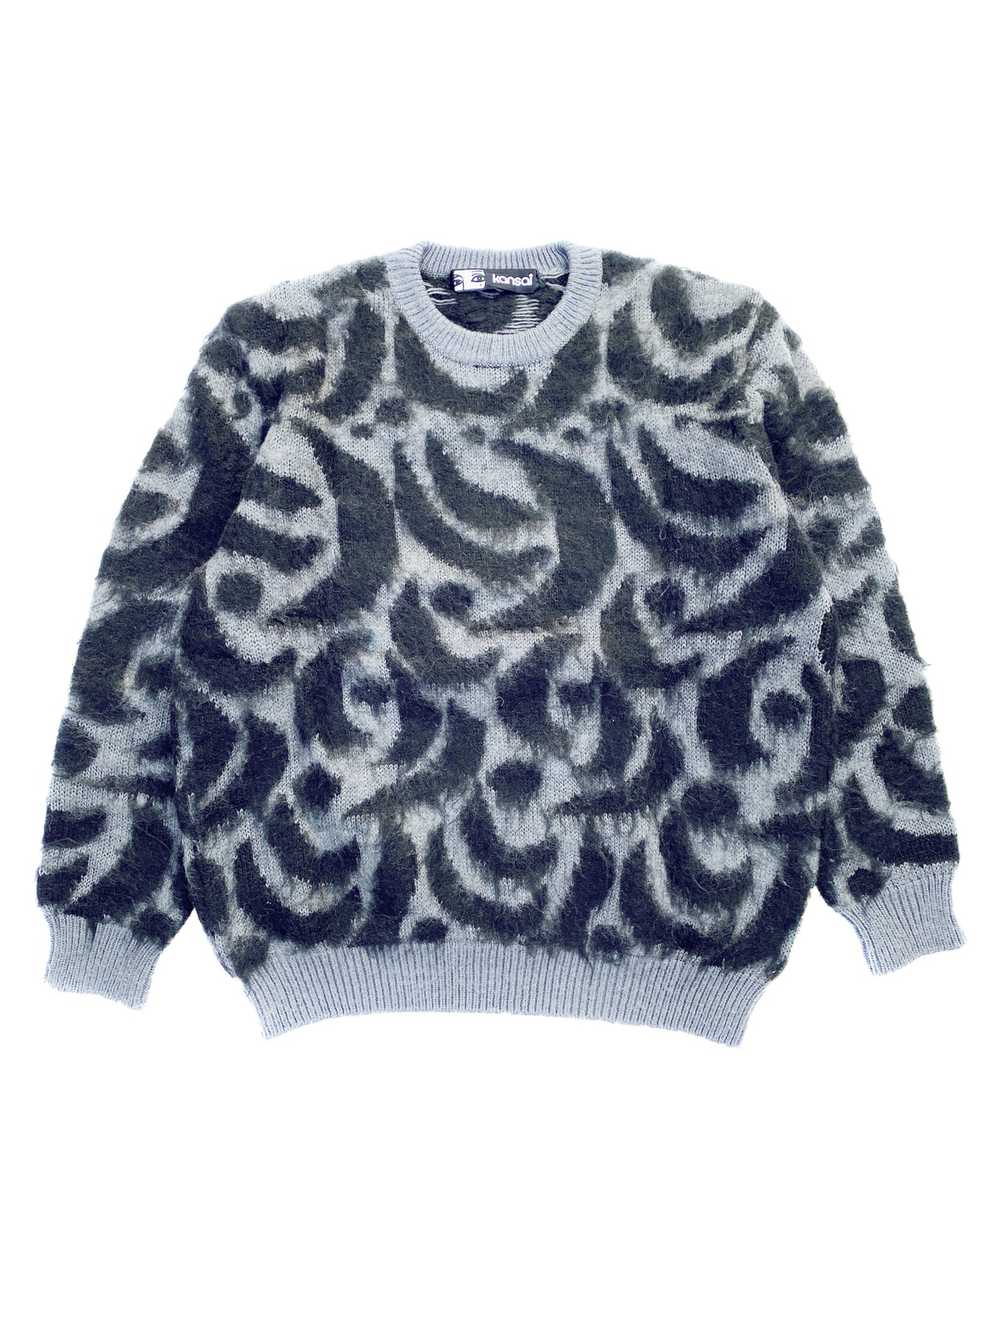 Kansai Yamamoto Mohair Tribal Sweater - image 1